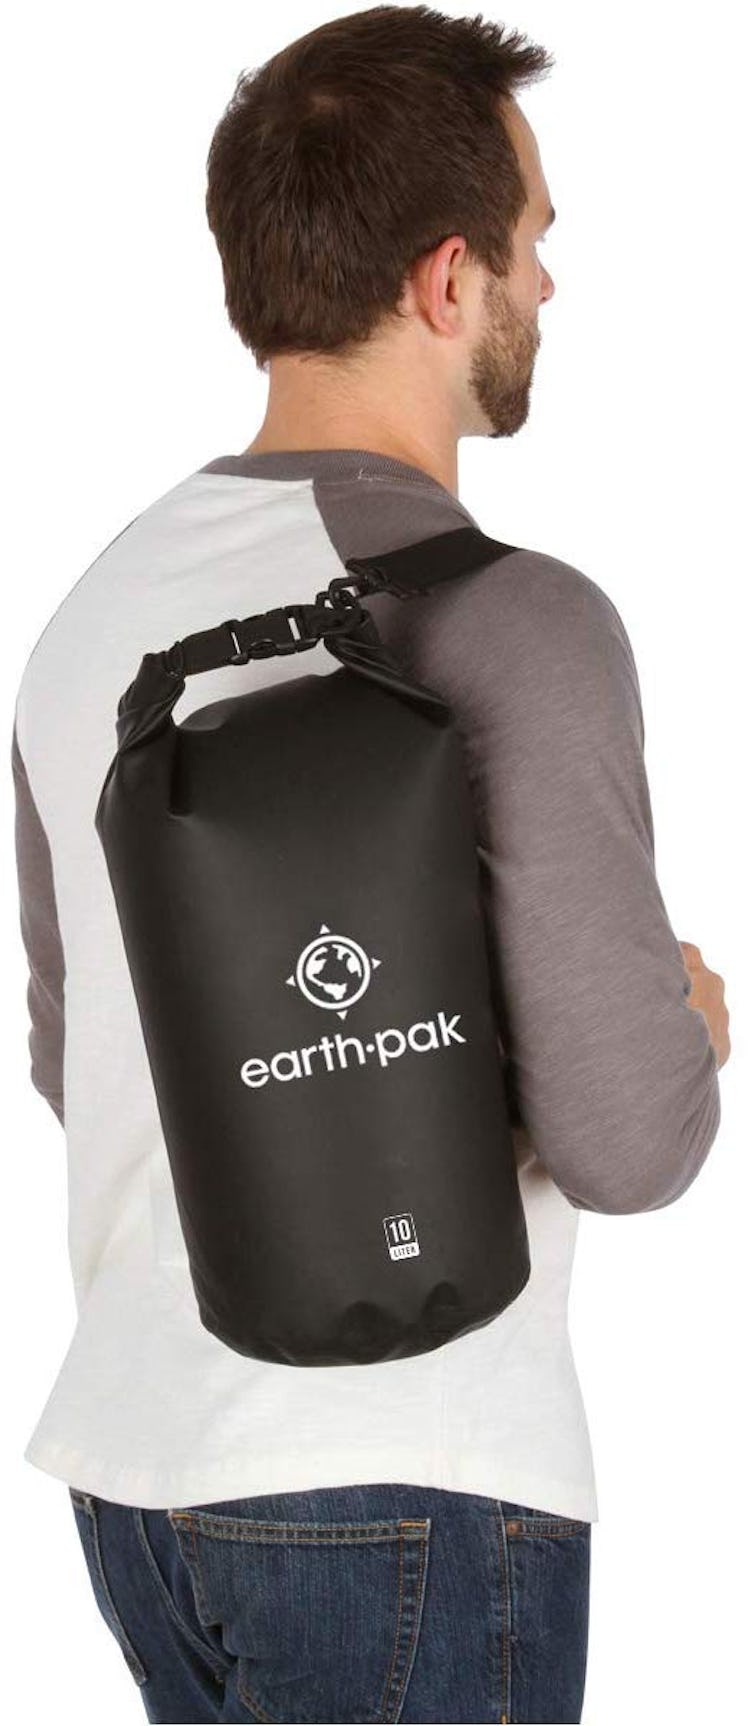 Earth Pak -Waterproof Dry Bag 10L